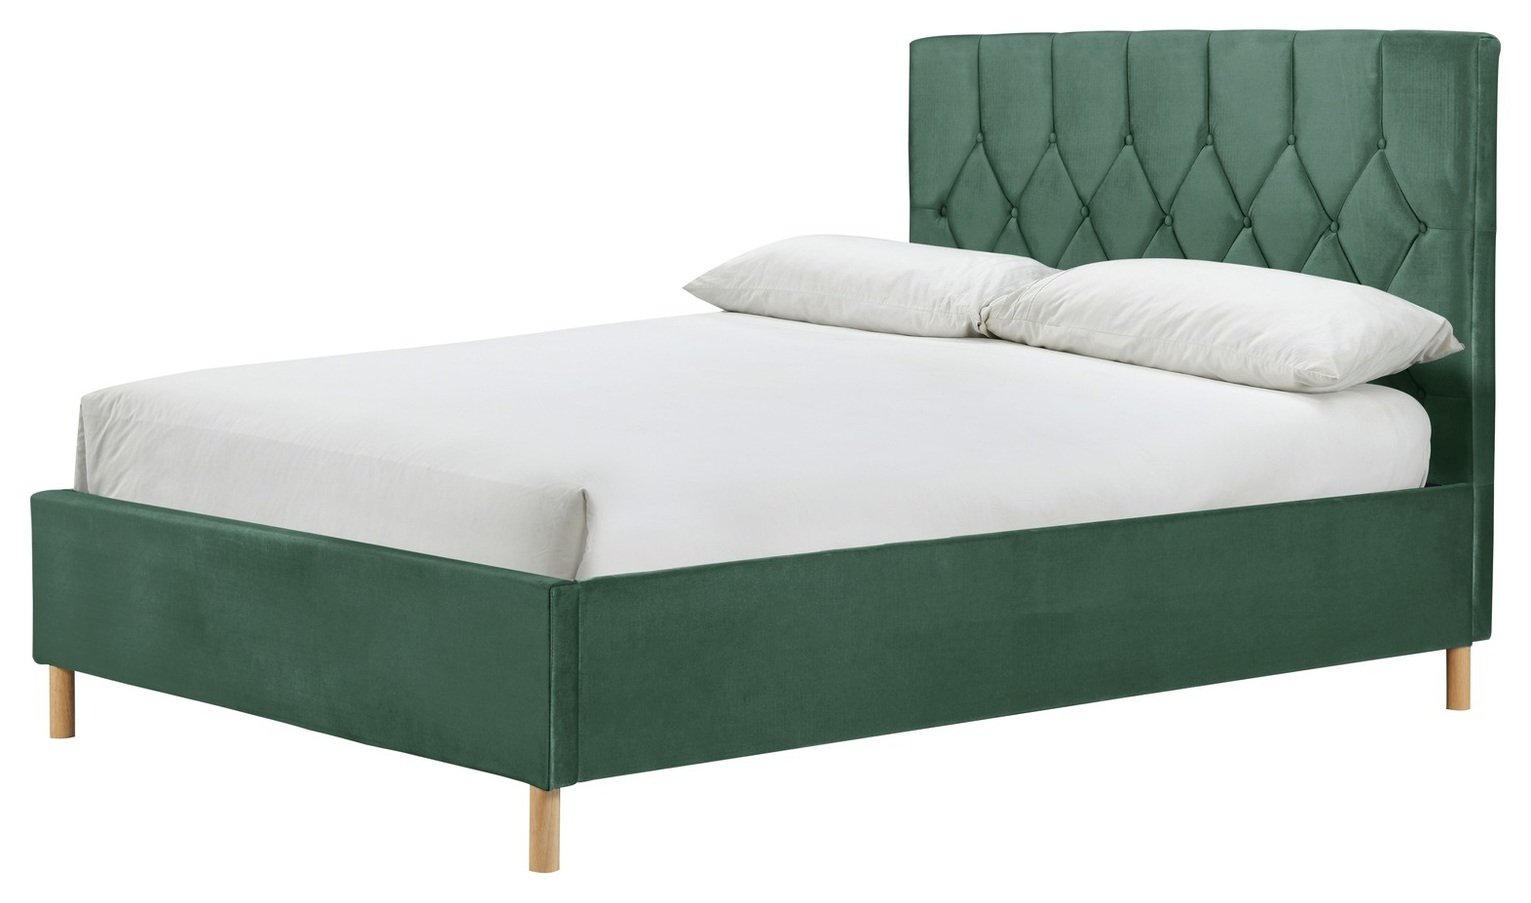 Birlea Loxley Small Double Ottoman Fabric Bed Frame - Green